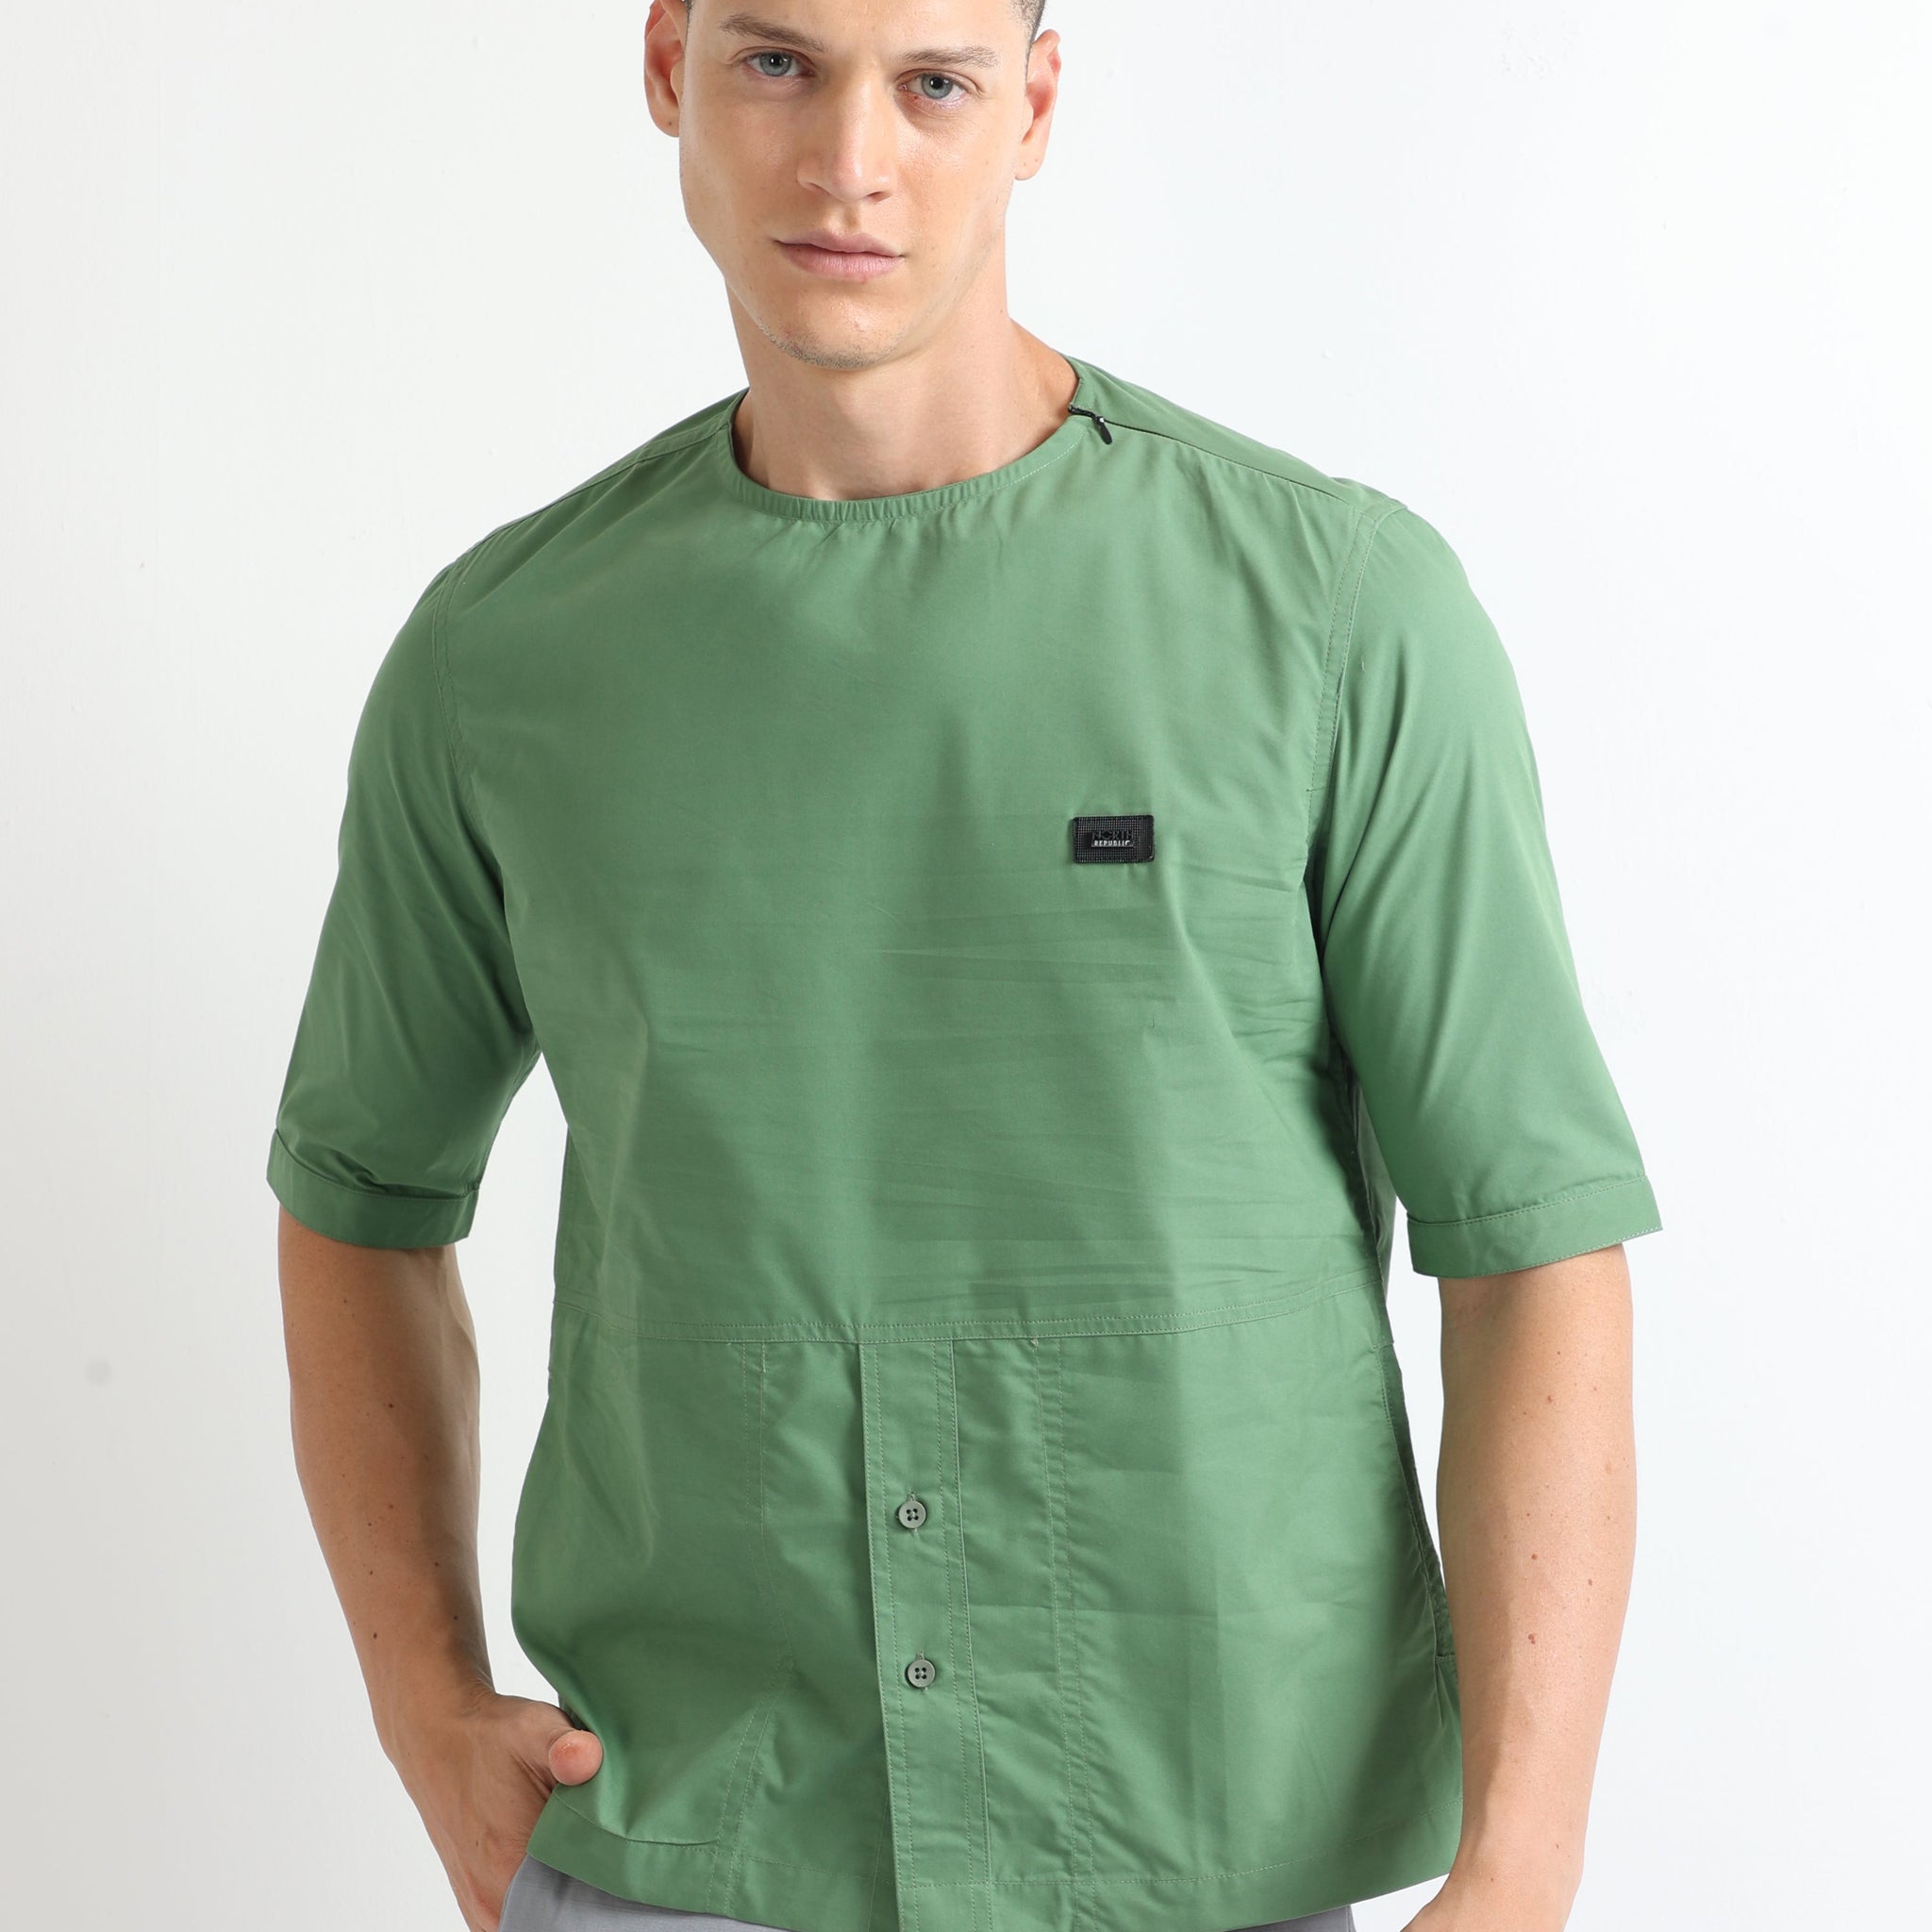 Buy Stylish Side Pocket Crew Neck Mens Shirt Online.